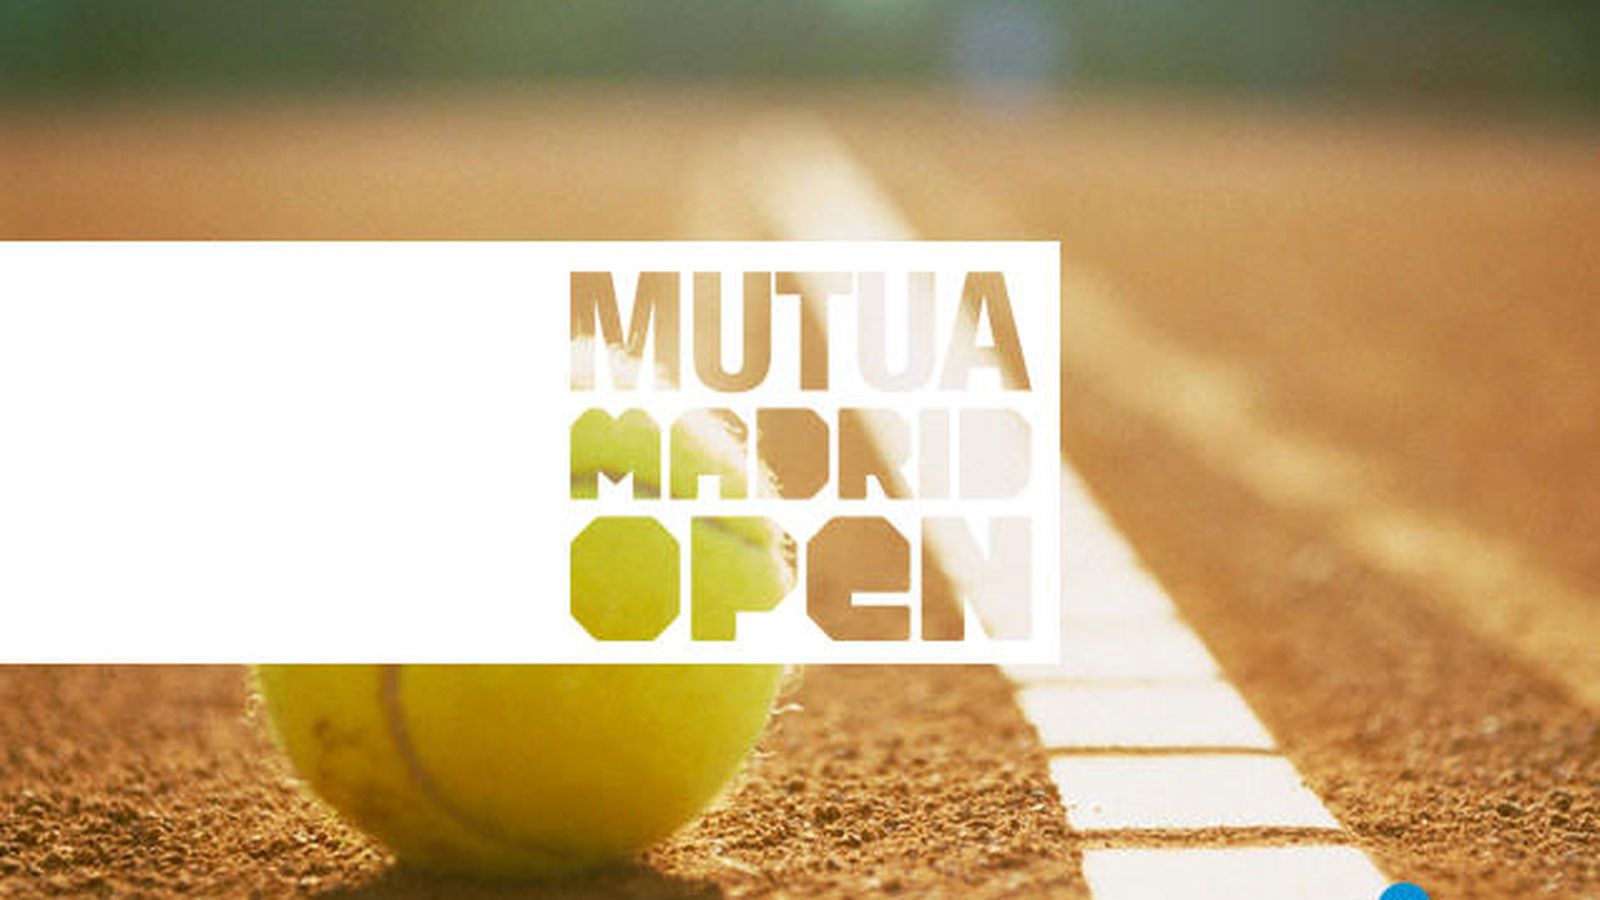 Foto: Mutua Madrid Open